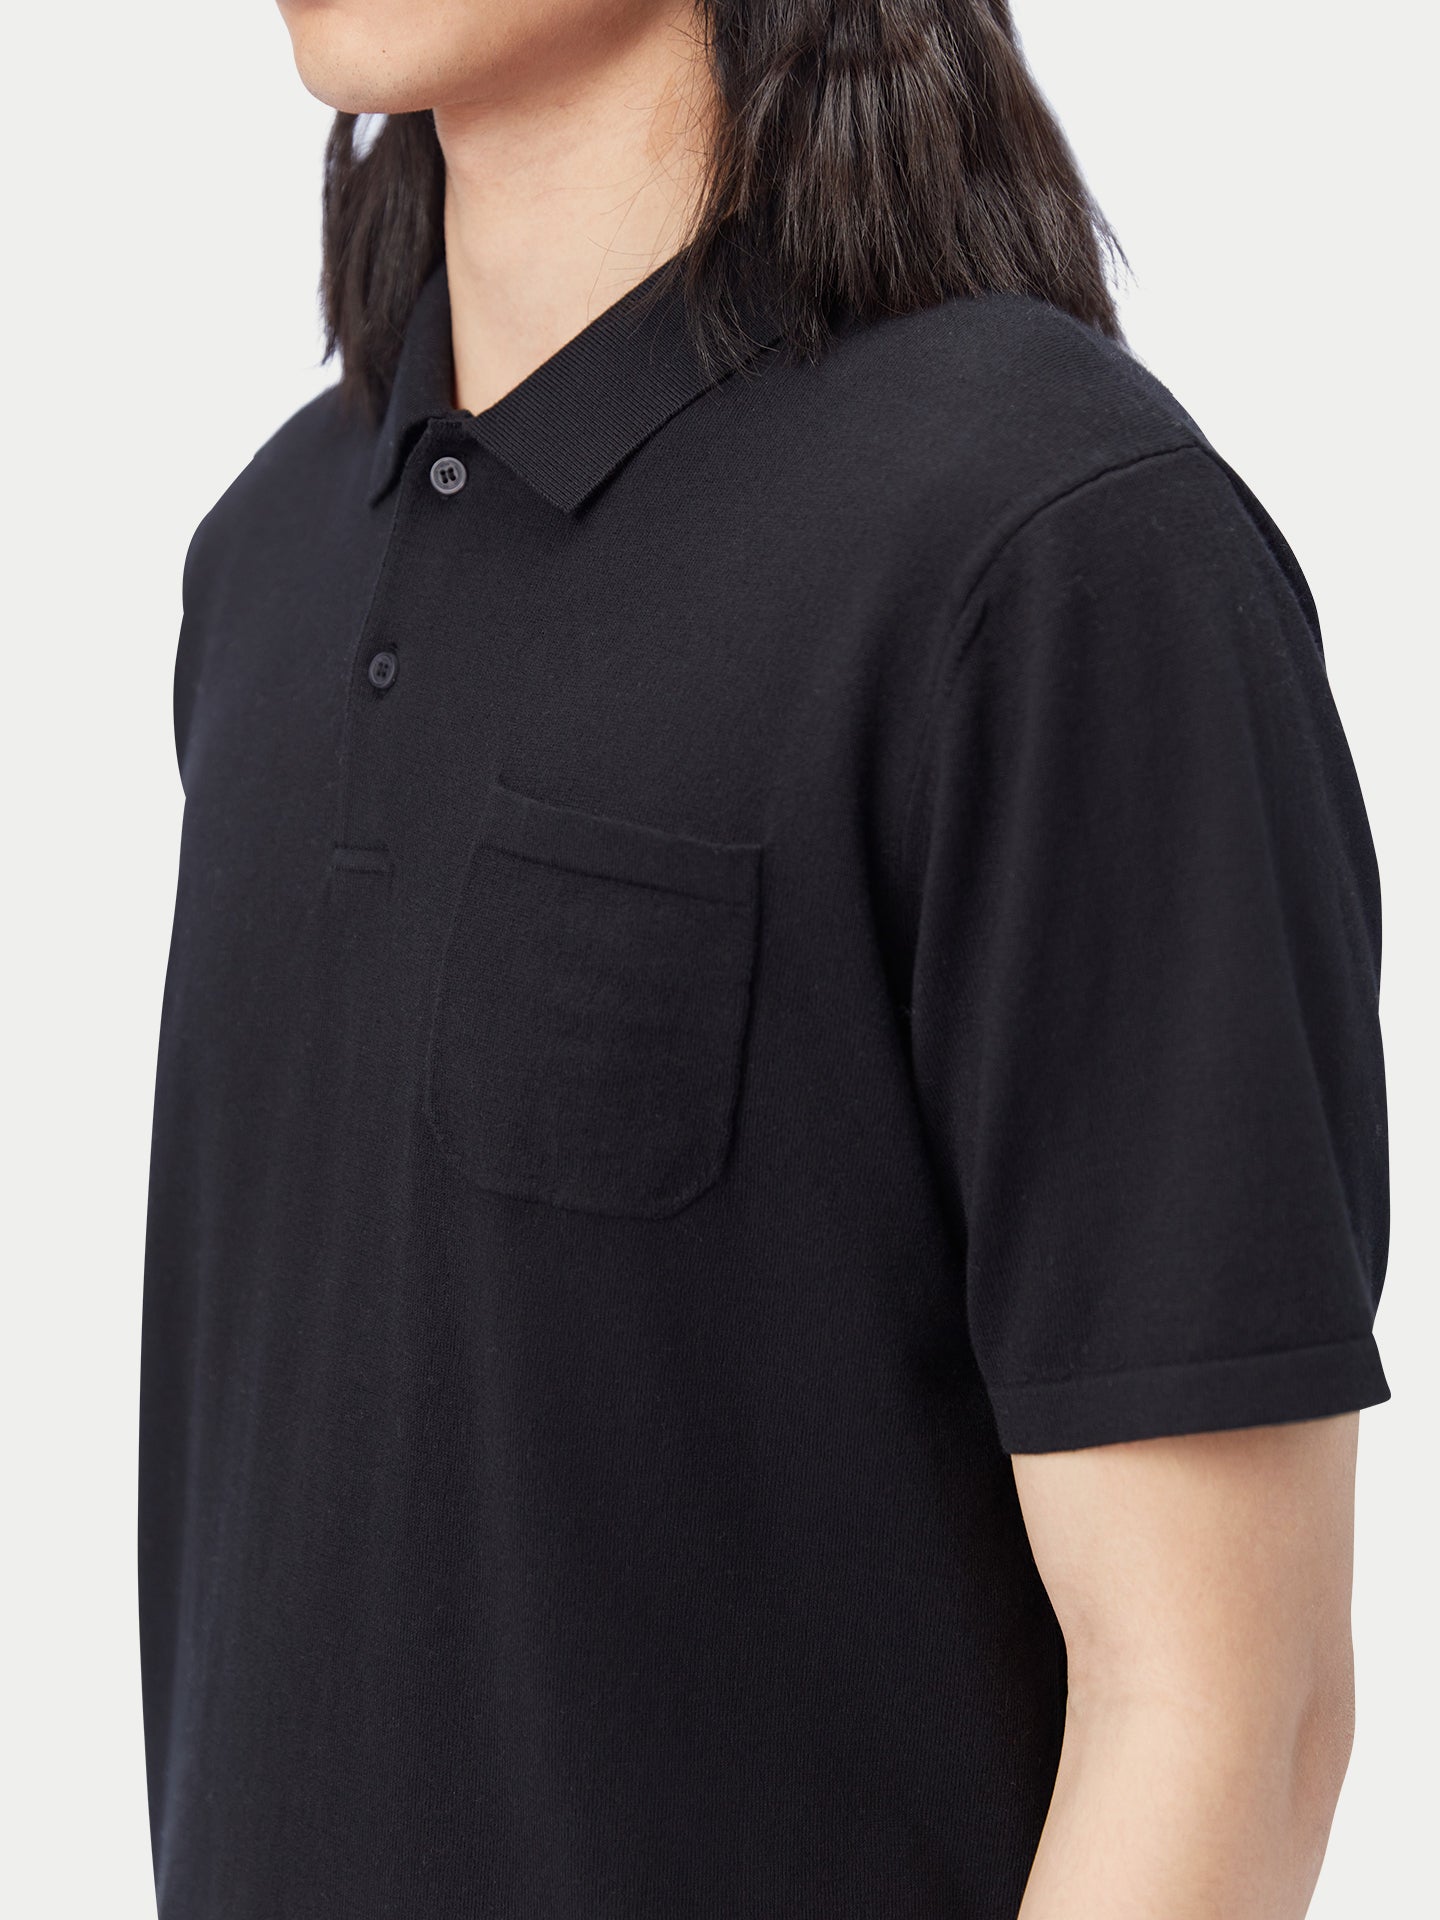 Men's Cotton Silk Cashmere Blend Polo Shirt Black - Gobi Cashmere